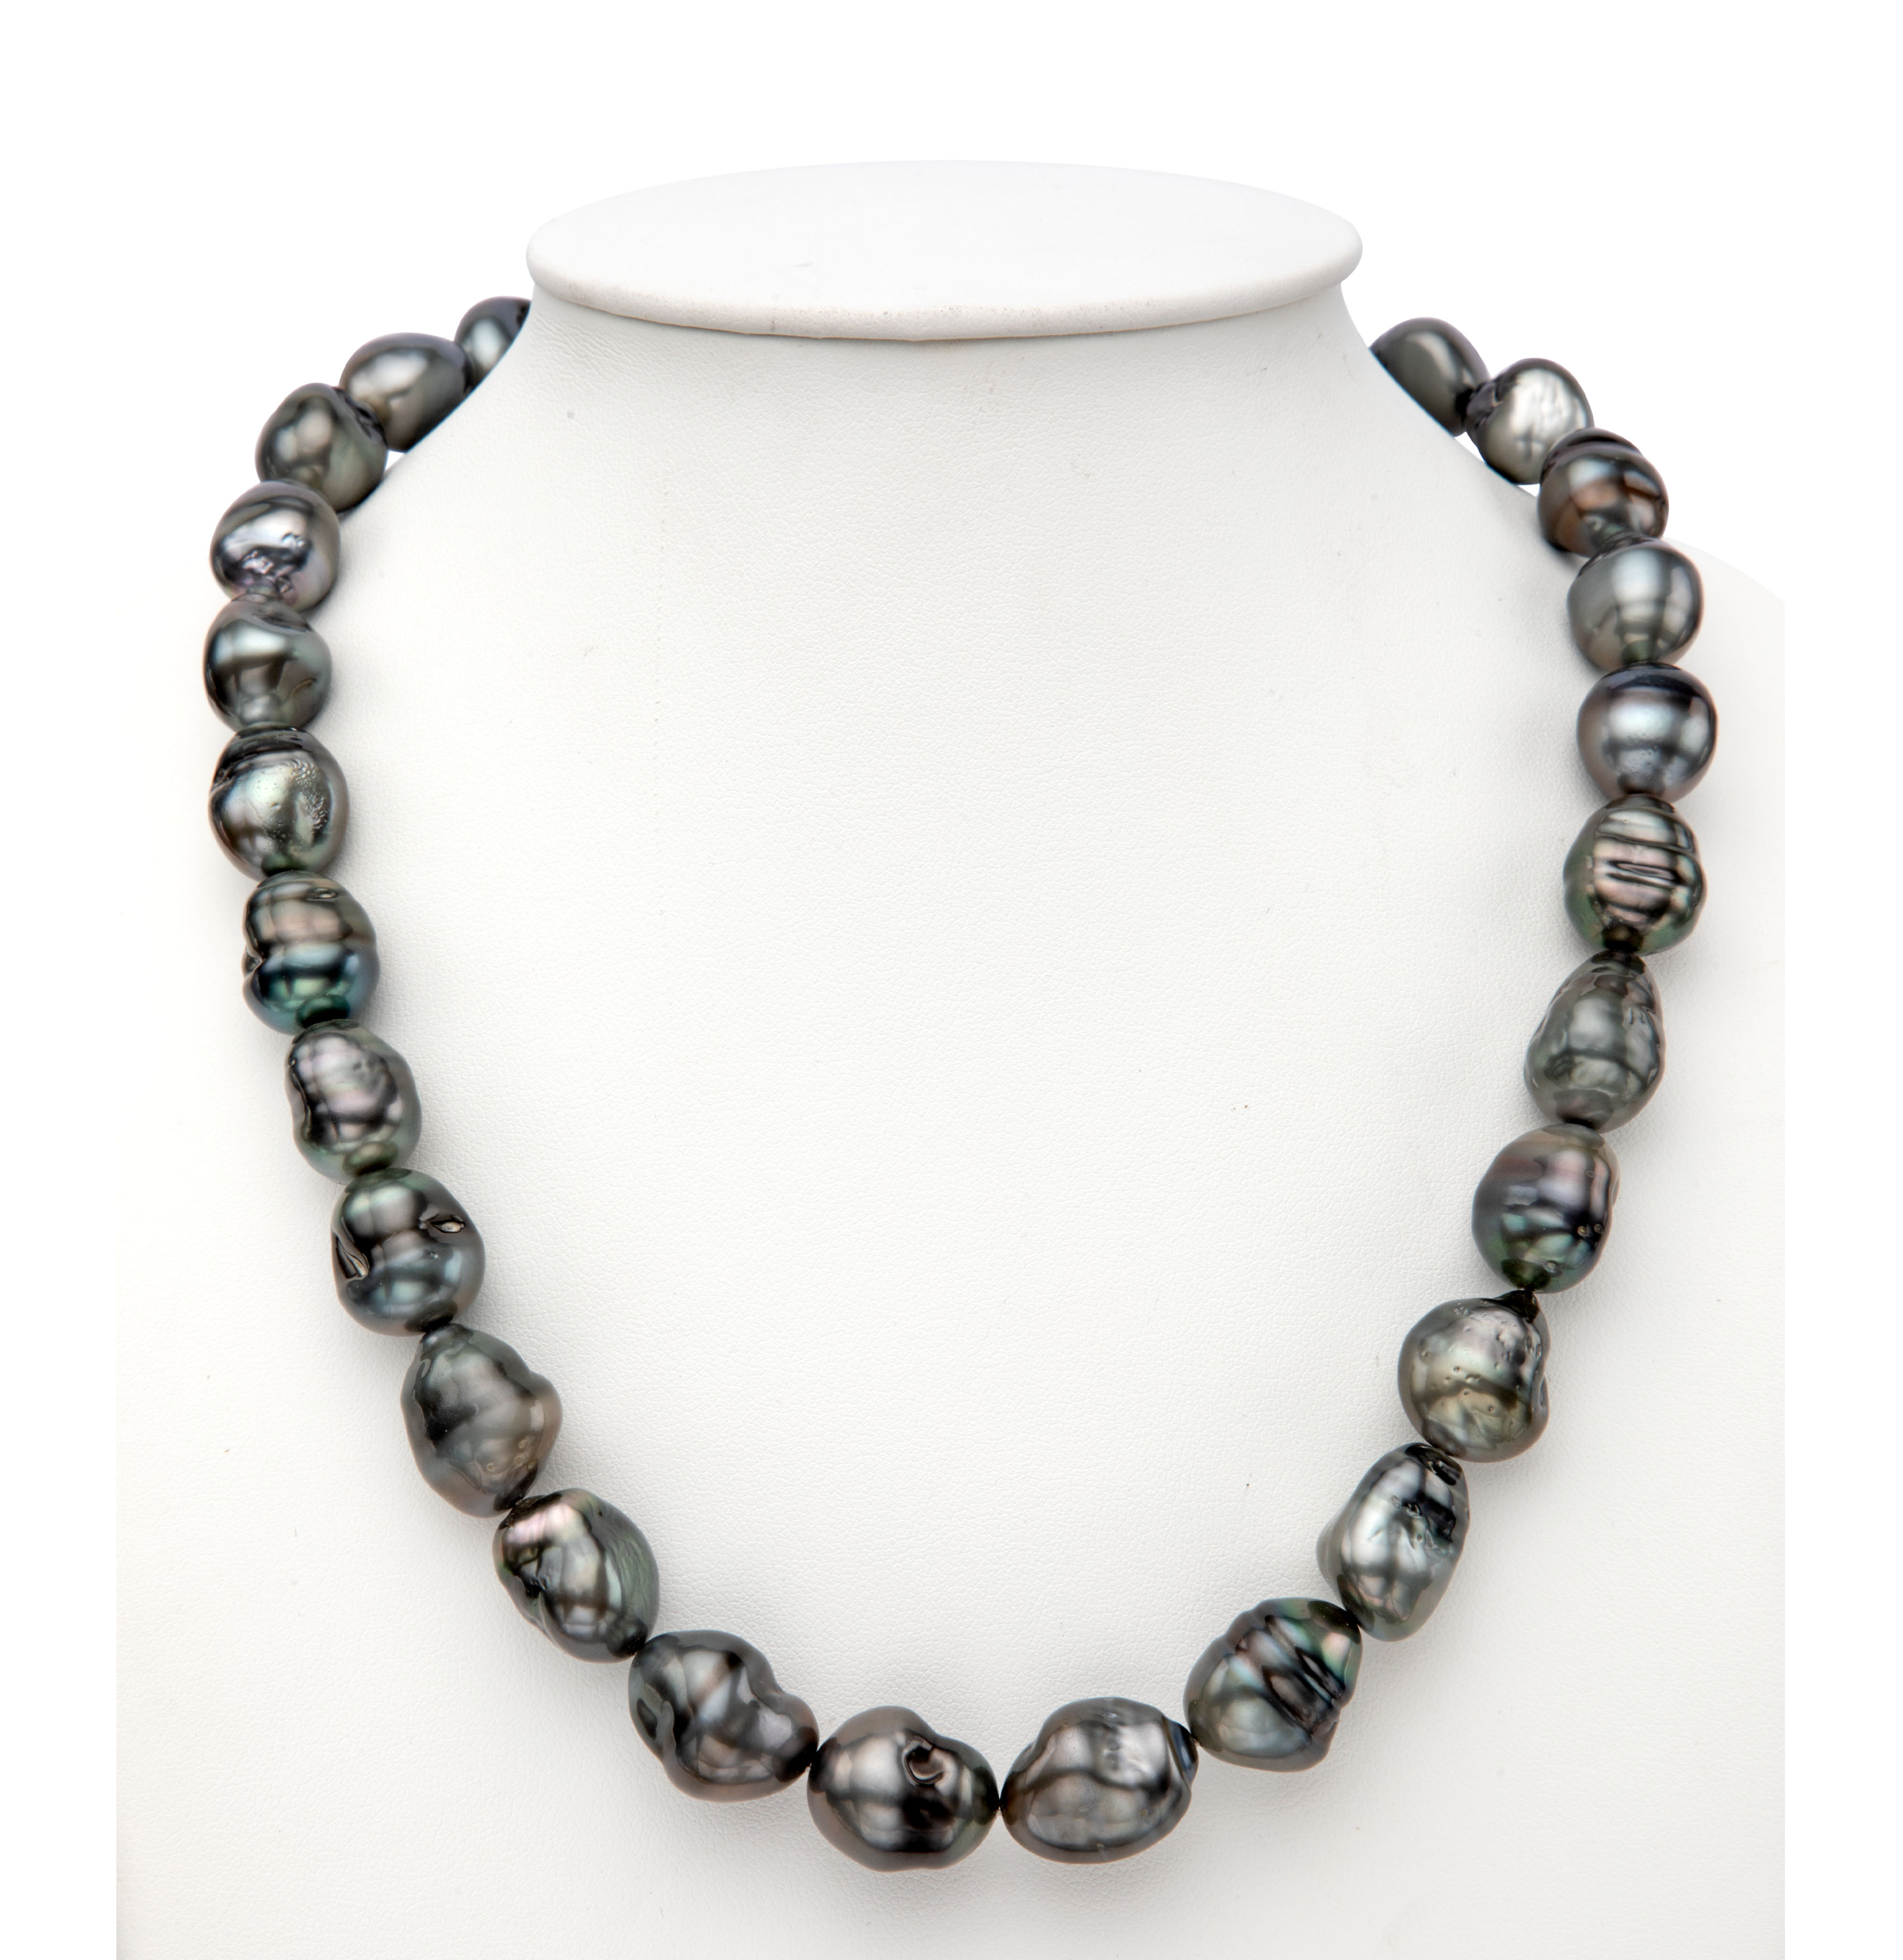 Genuine natural 10-11mm tahitian black pearl necklace 18